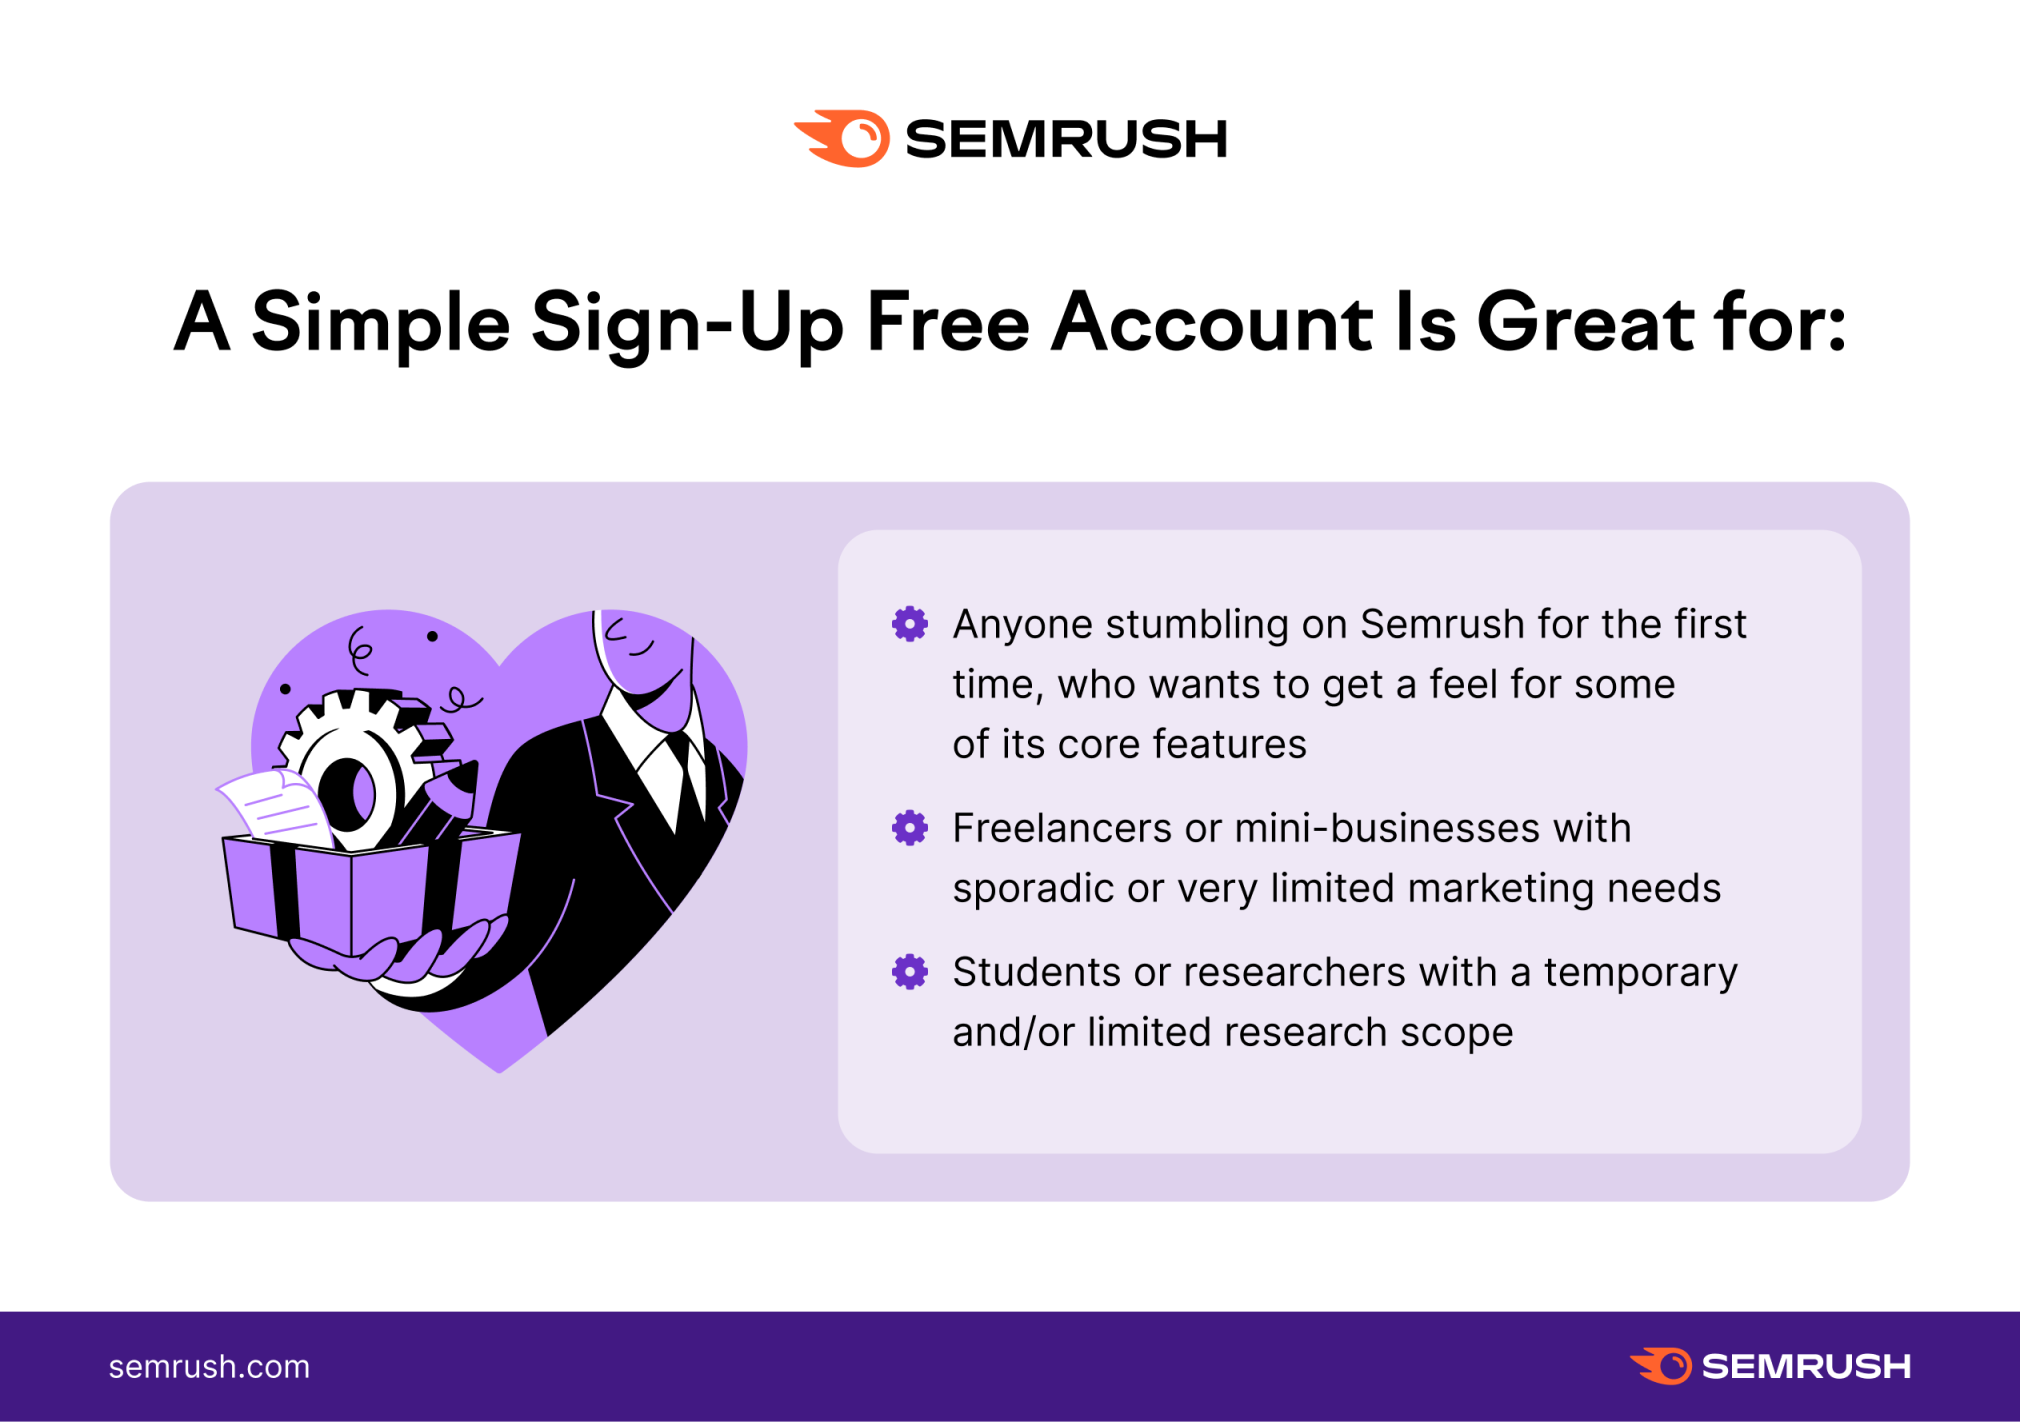 Semrush Simple Sign-on Account